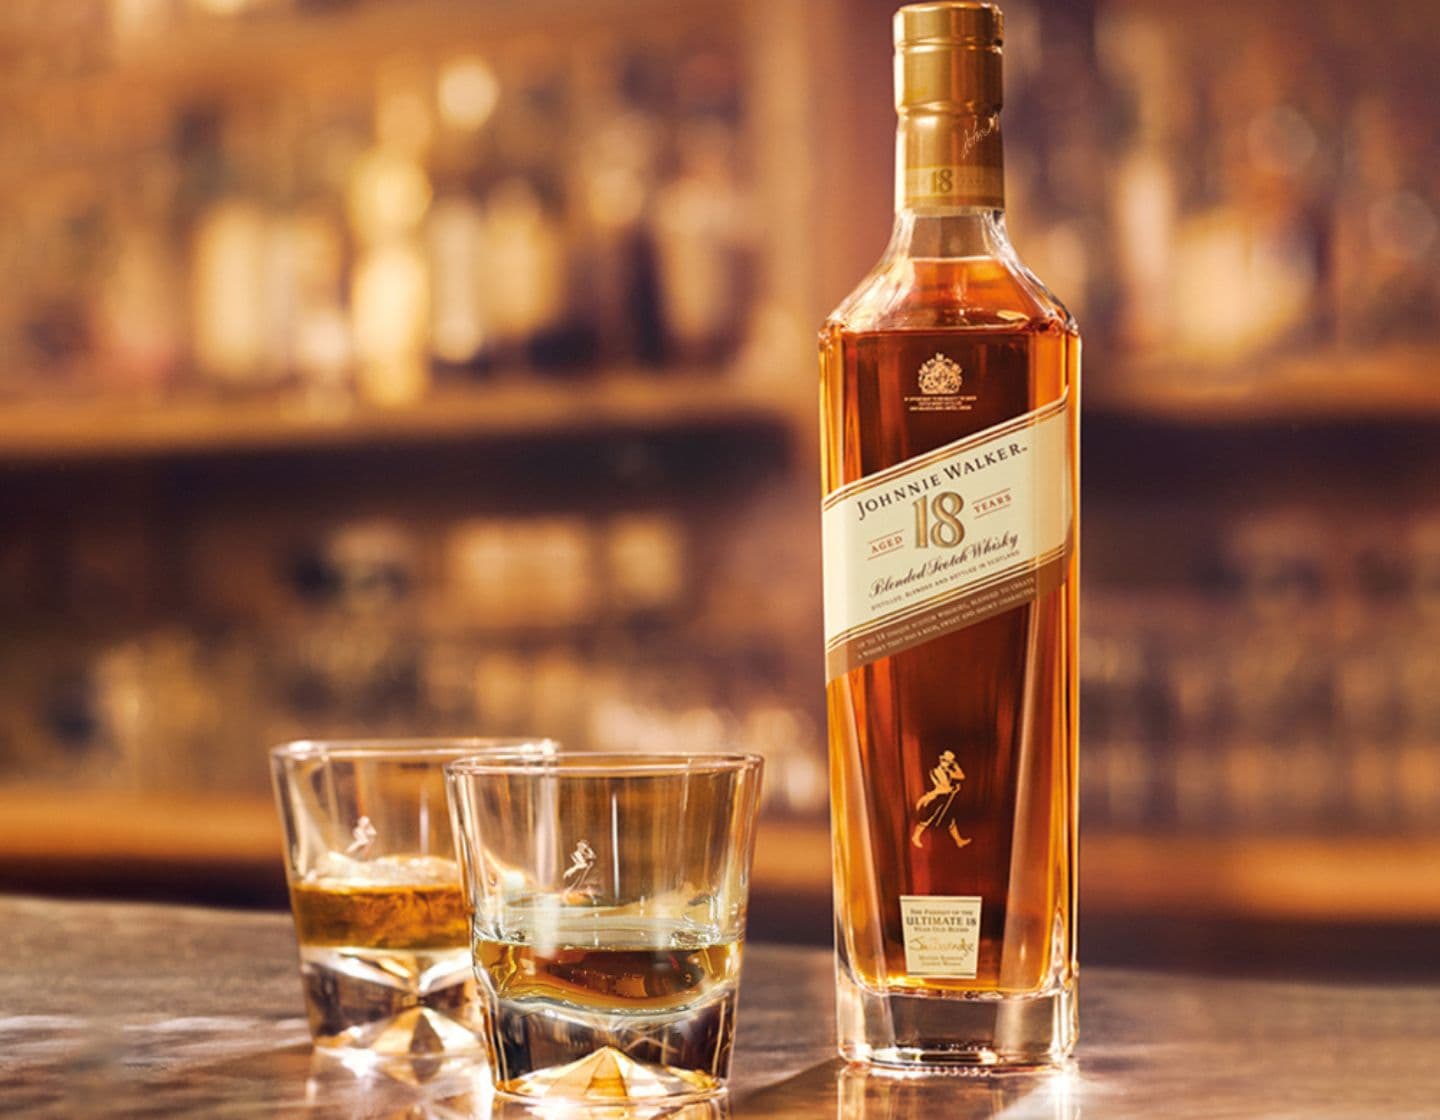 Botella de whisky Johnnie Walker Aged 18 Years junto a 2 vasos de whisky.